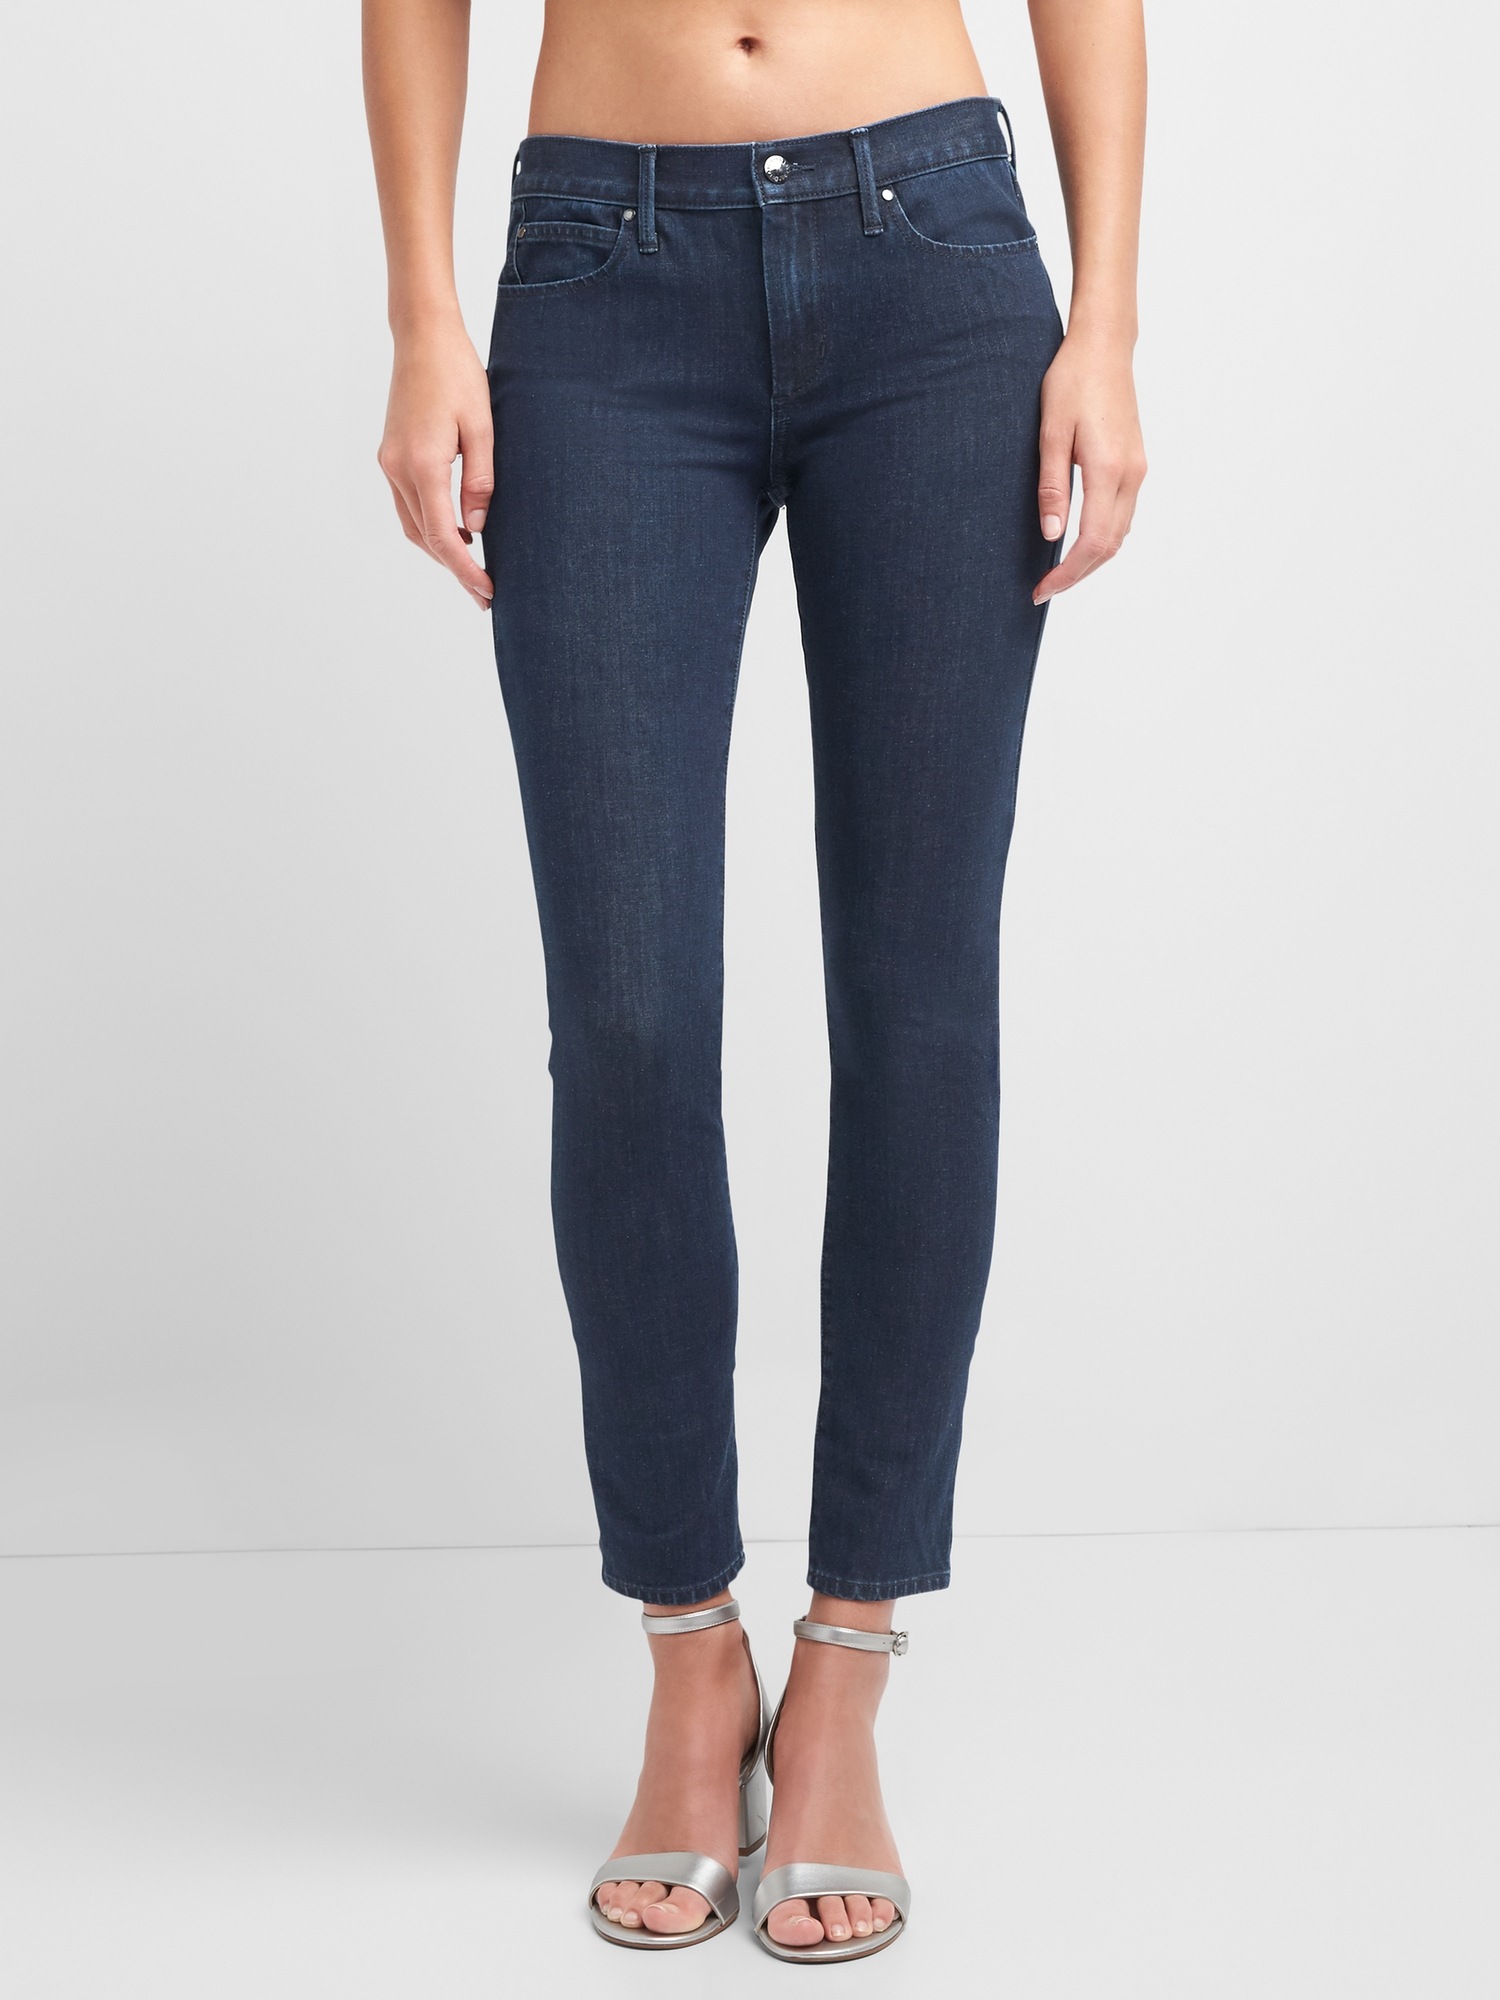 GAP GAPFlex Slim Straight Skinny Jeans with Washwell 29x34 Indigo